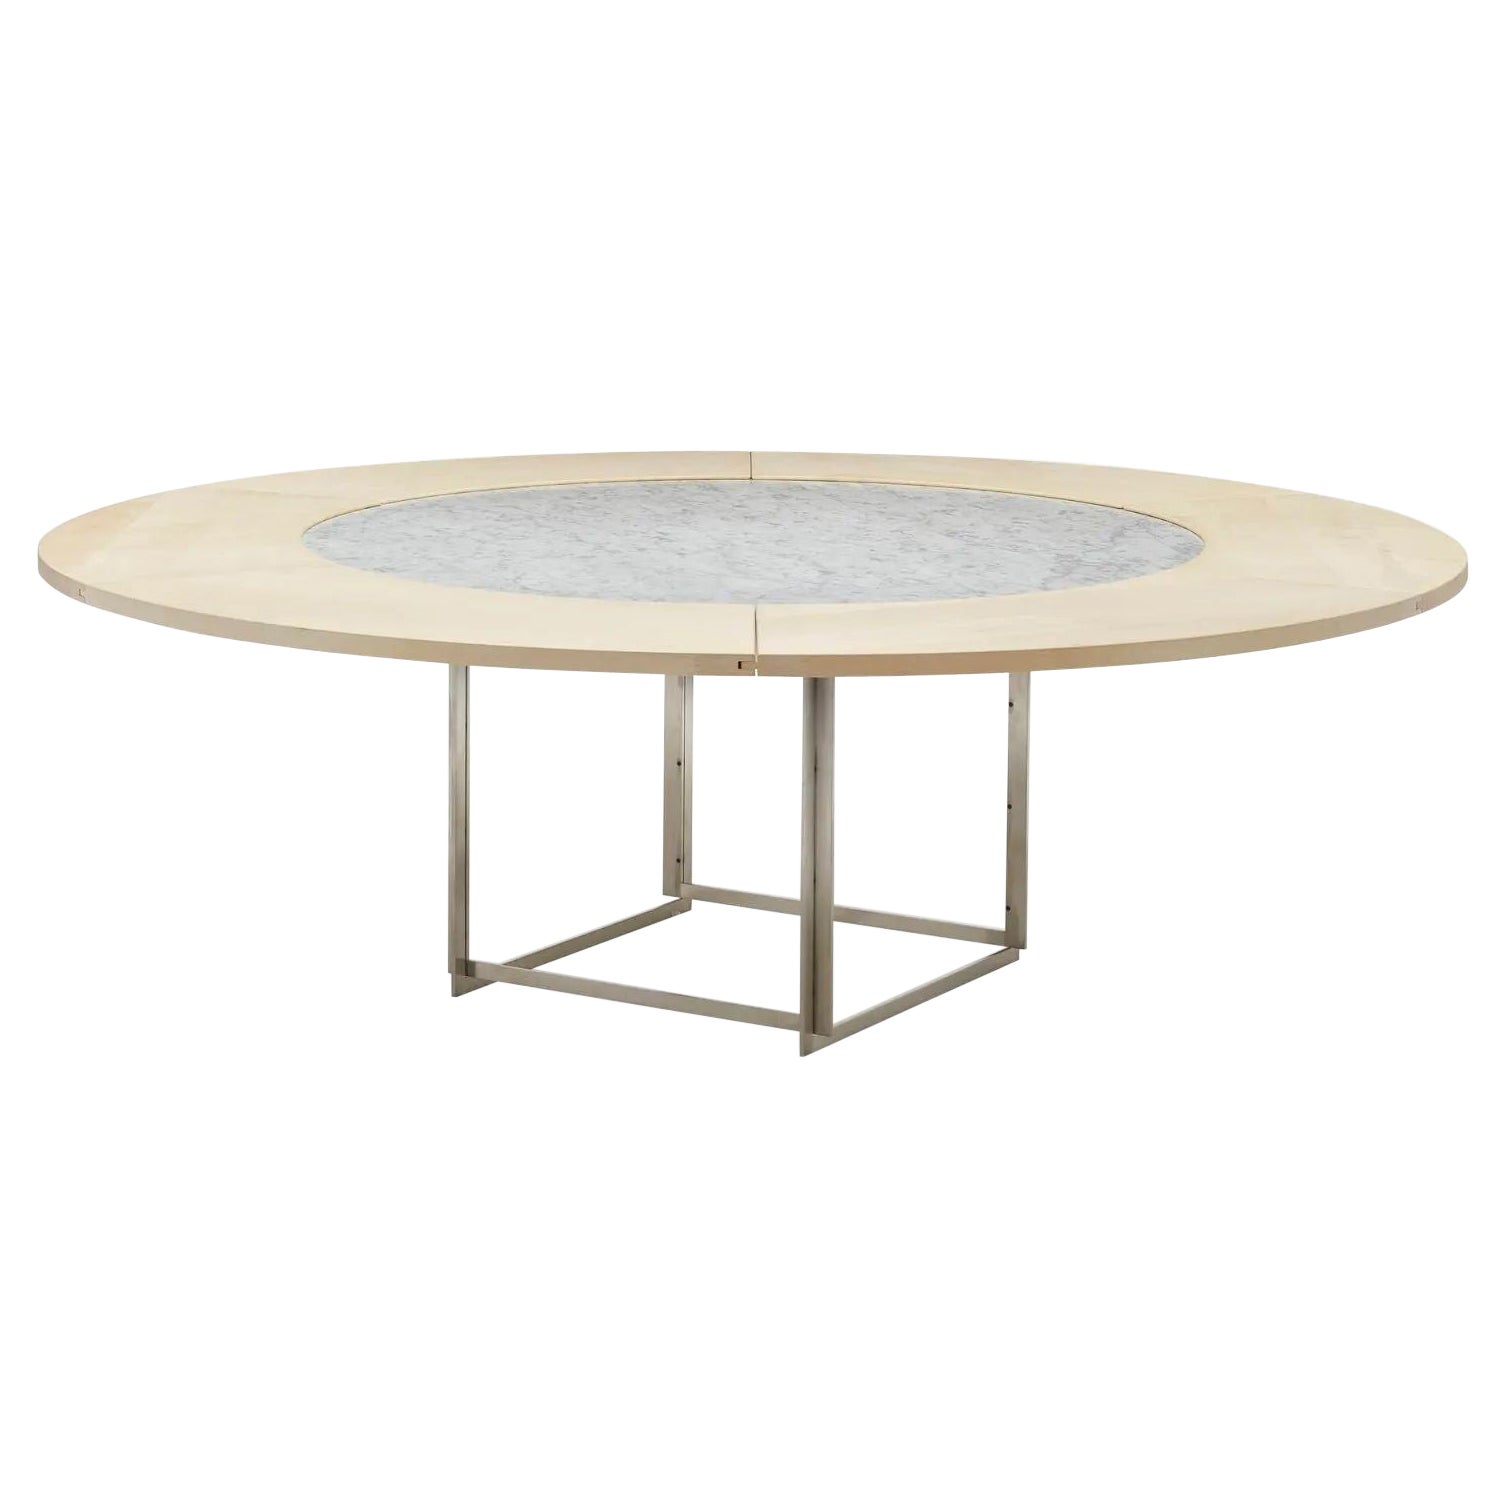 Poul Kjaerholm Mid-Century Modern PK-54 Dining Table, Marble, Maple, Steel, 2011